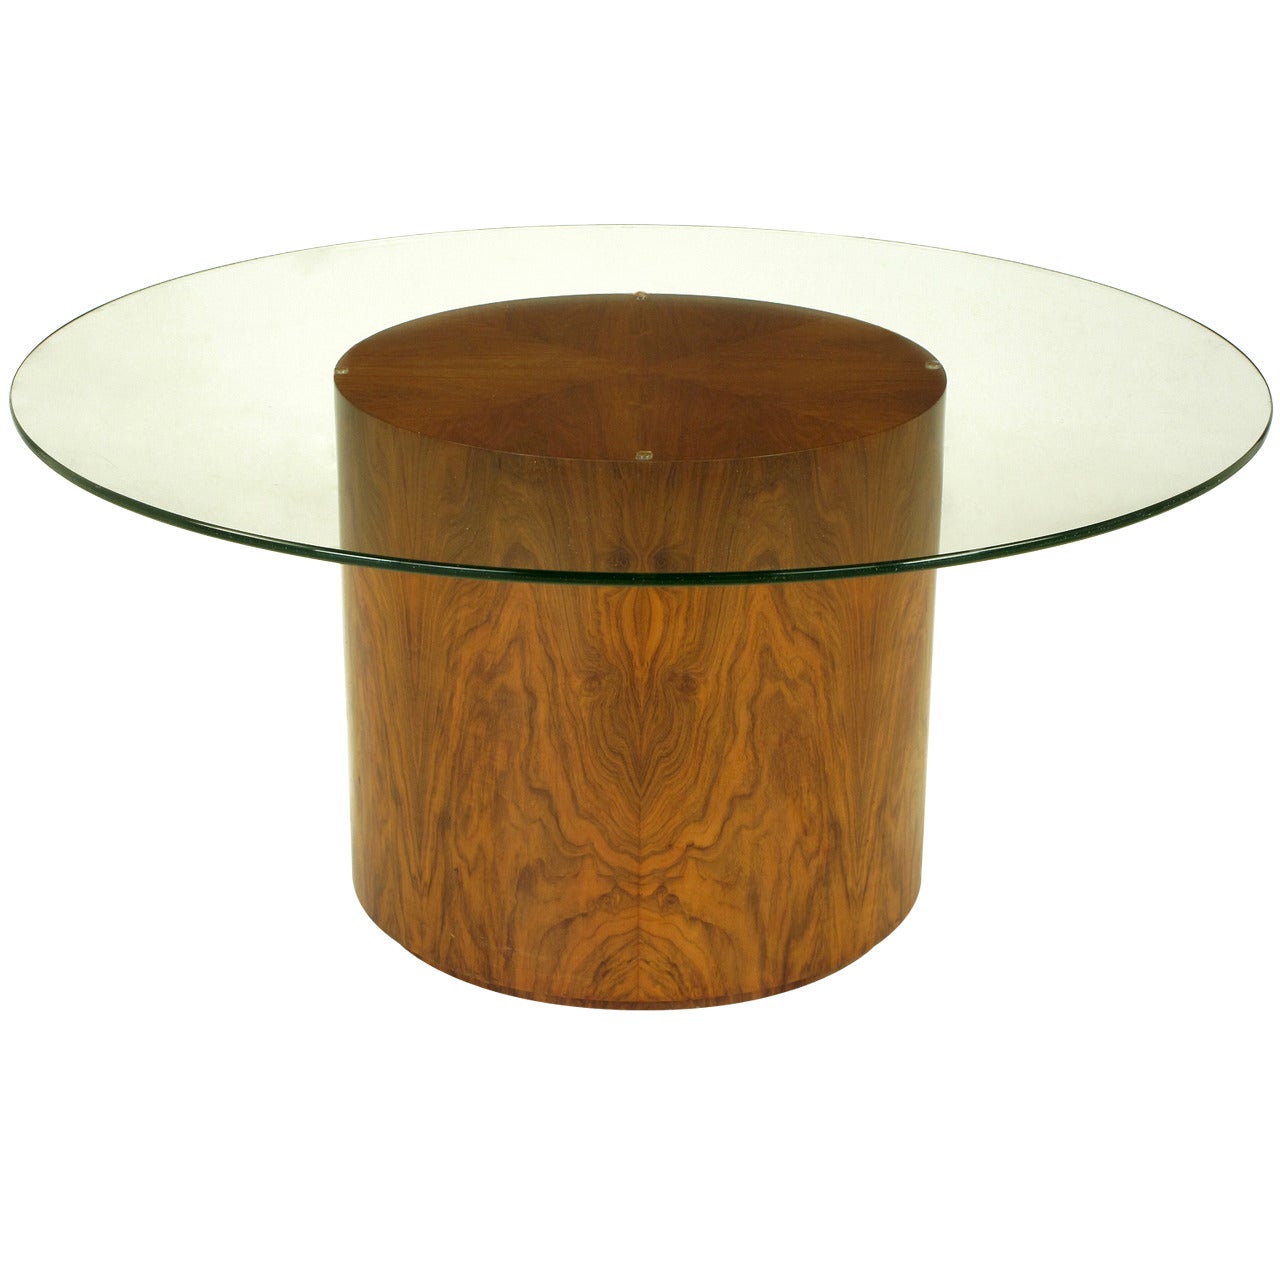 Highly Figured Walnut Pedestal Coffee Table